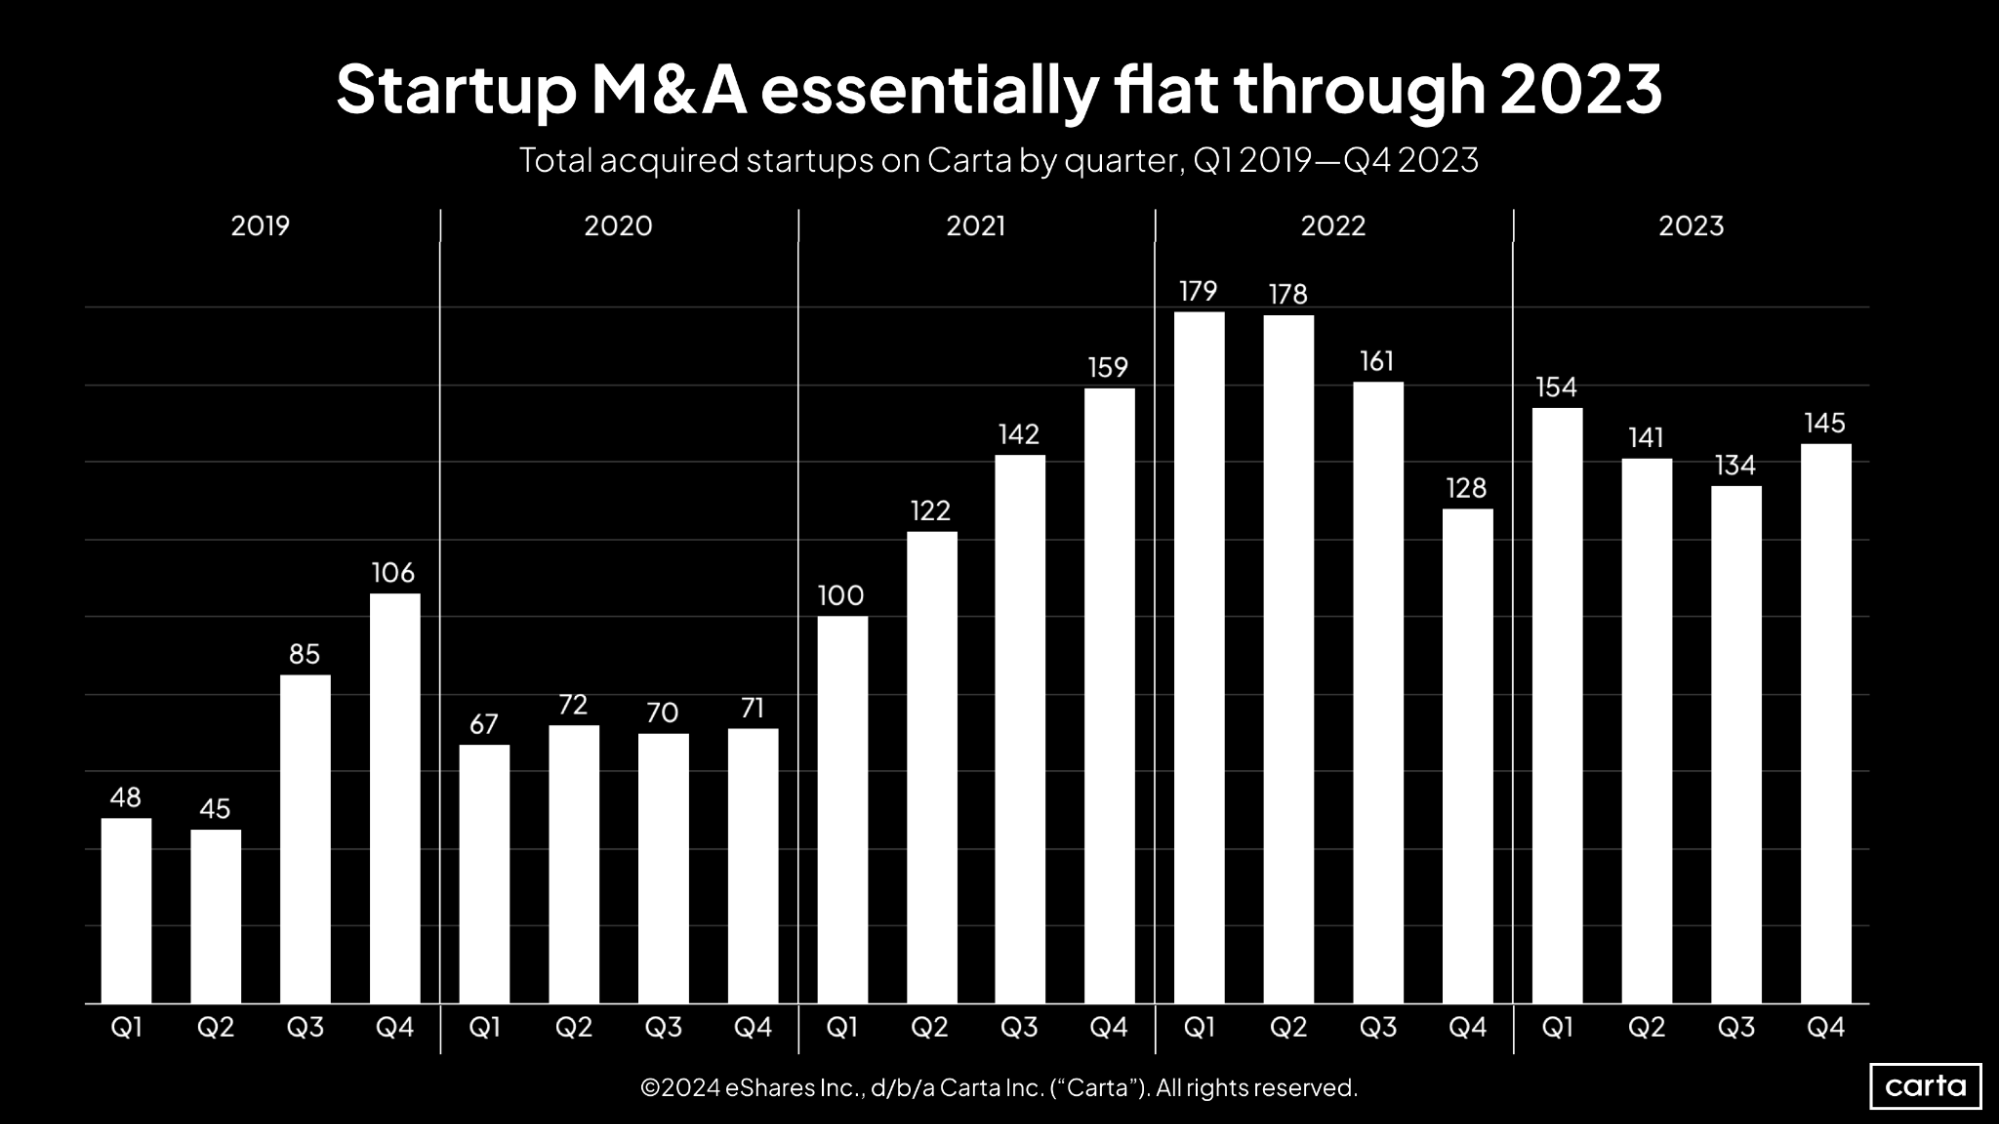 Carta SOPM Q4 2023 Startup M&A essentially flat through 2023